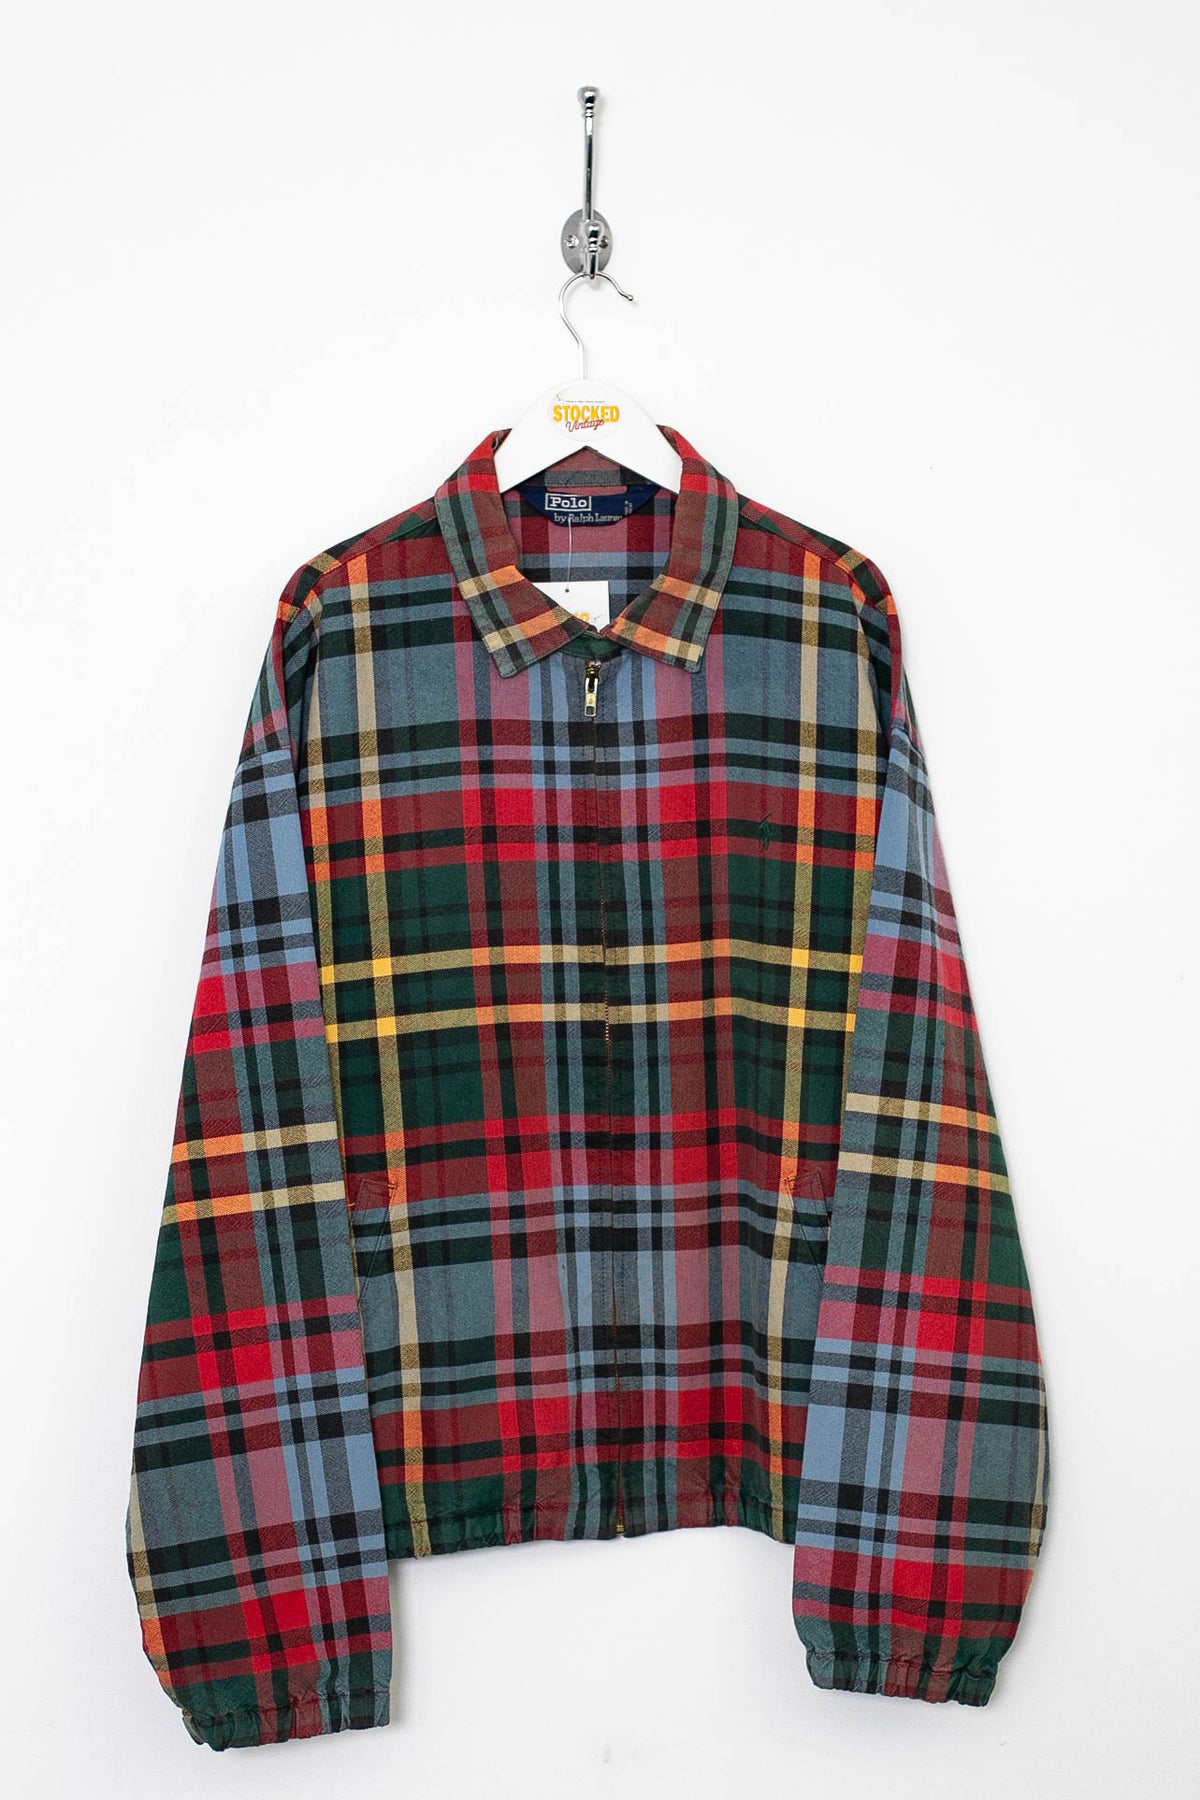 90s Ralph Lauren Harrington Jacket (XL)